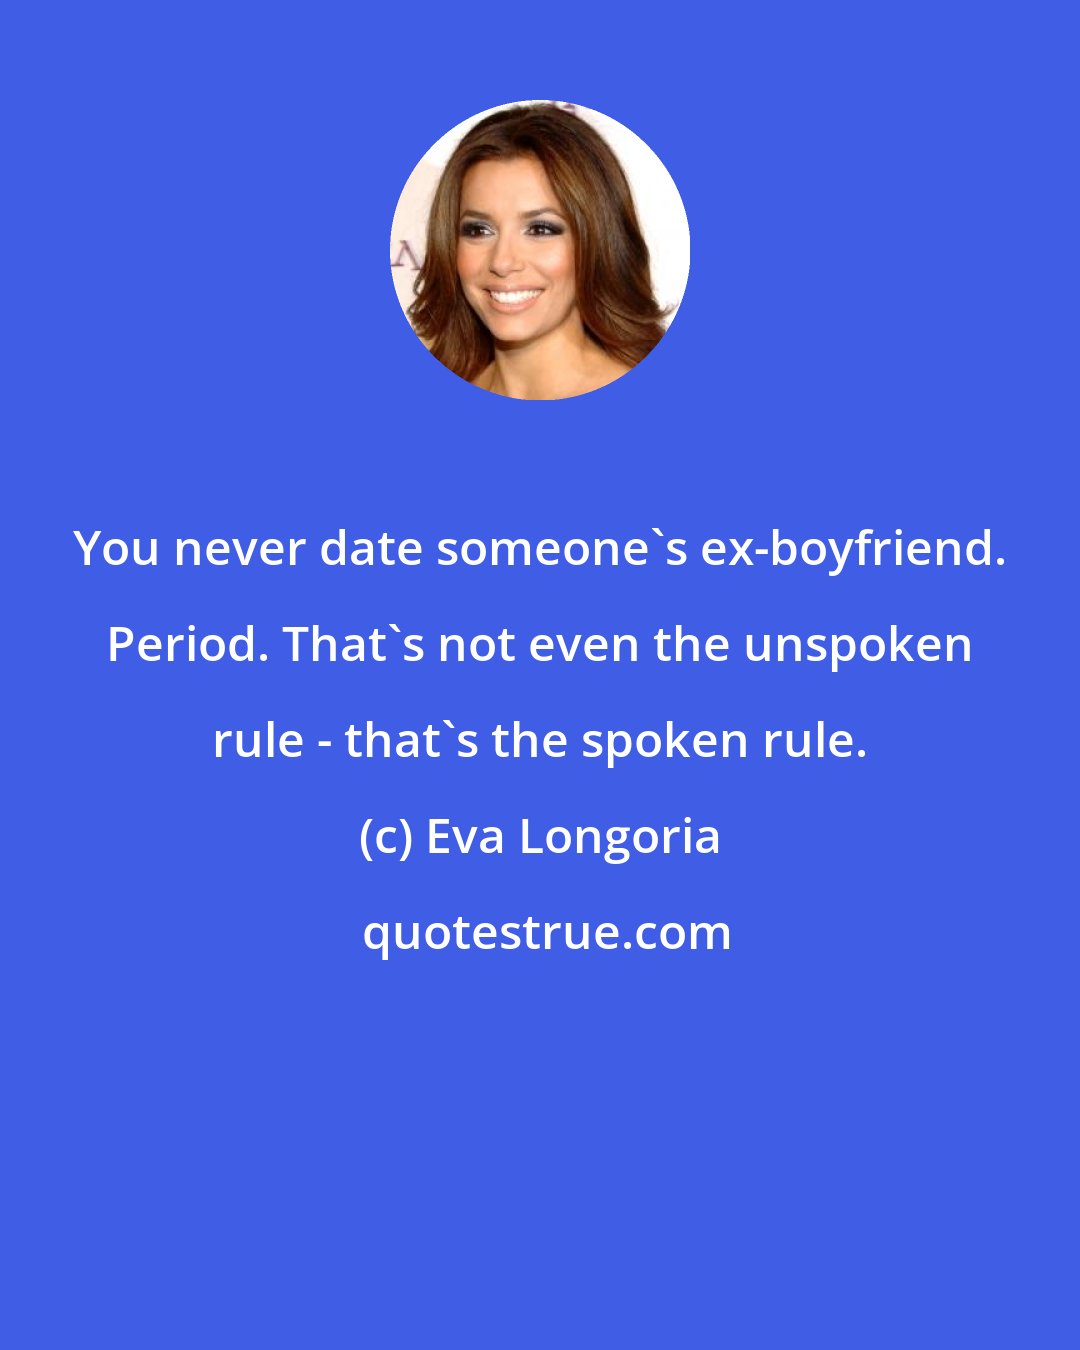 Eva Longoria: You never date someone's ex-boyfriend. Period. That's not even the unspoken rule - that's the spoken rule.